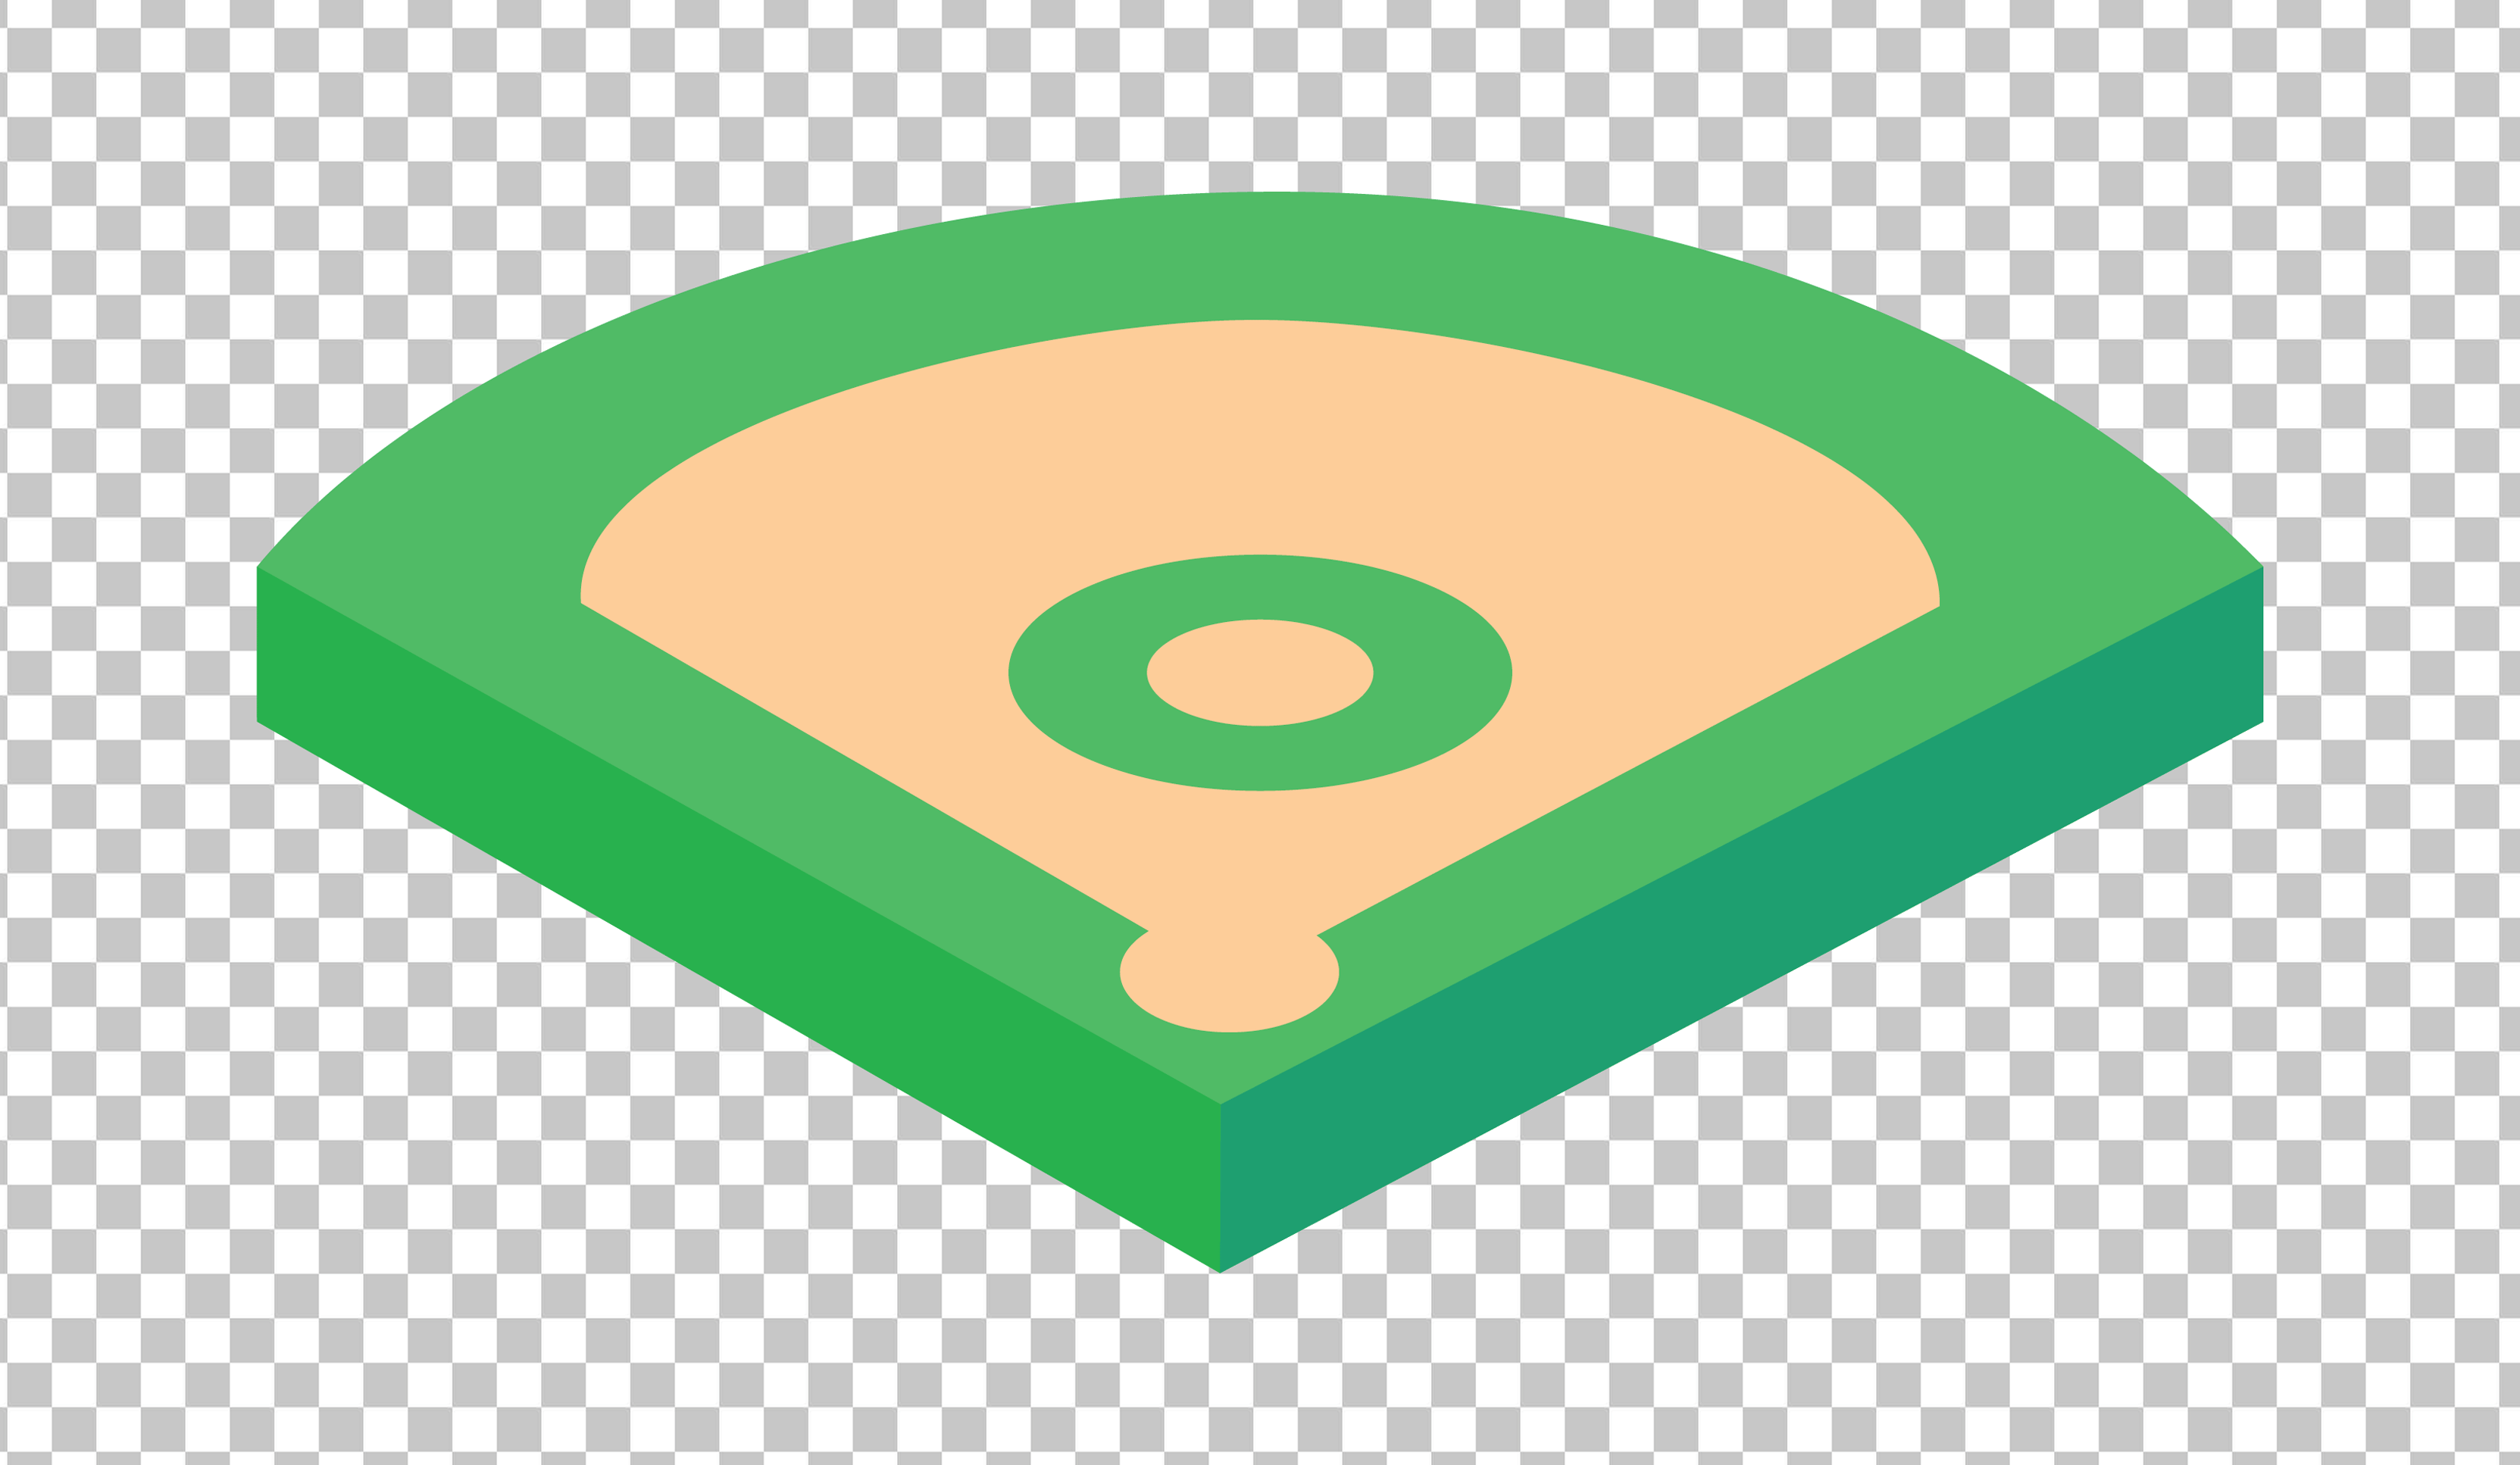 Isometric Baseball Field Illustration PNG Image